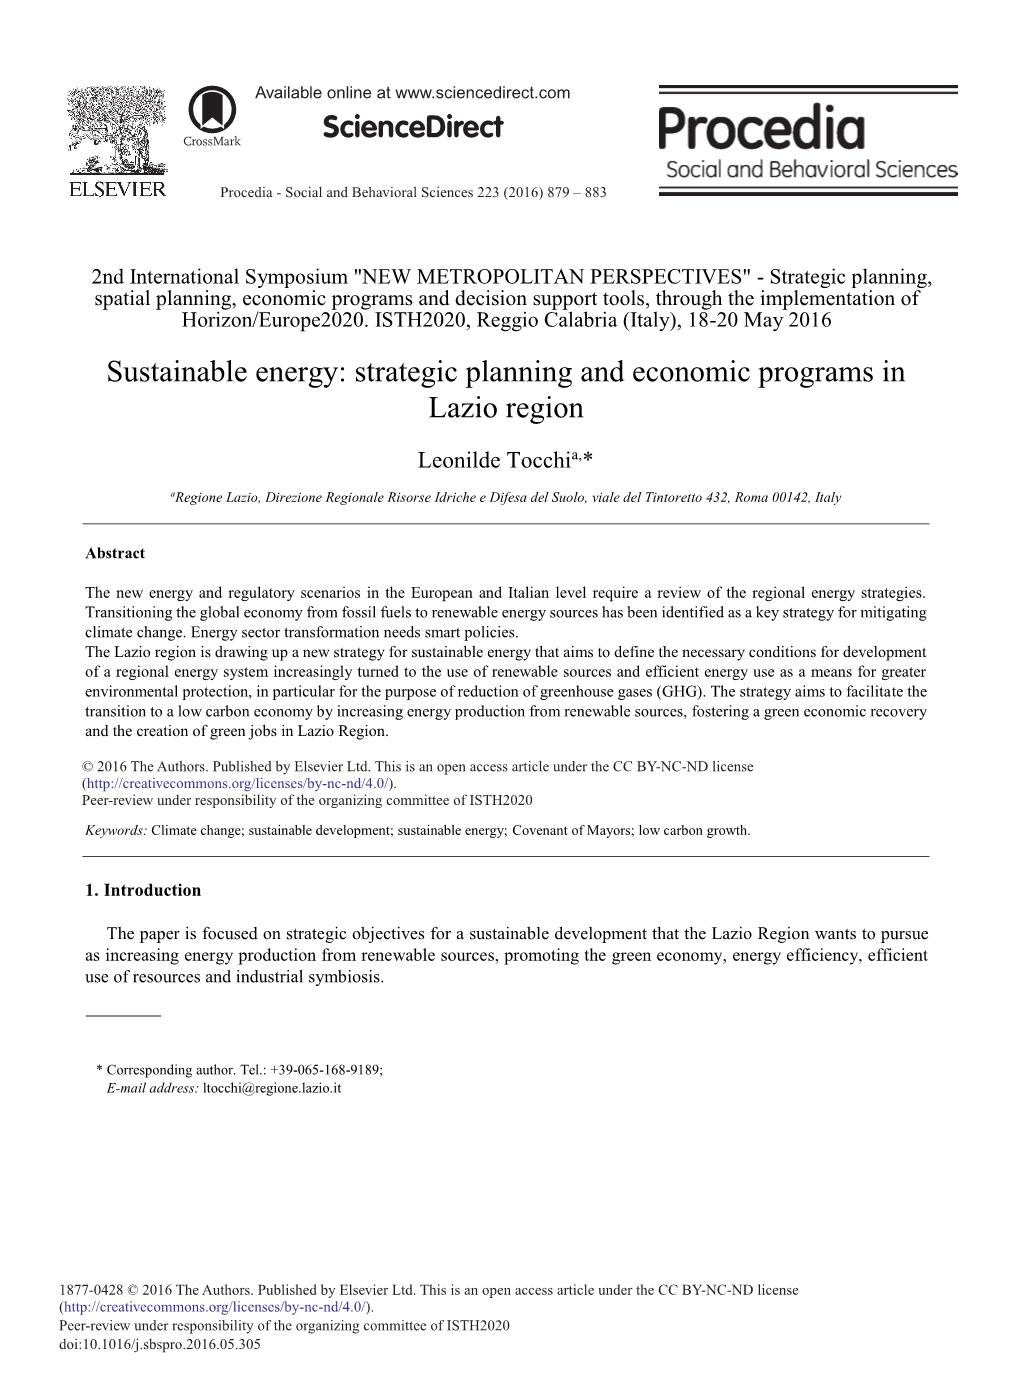 Sustainable Energy: Strategic Planning and Economic Programs in Lazio Region